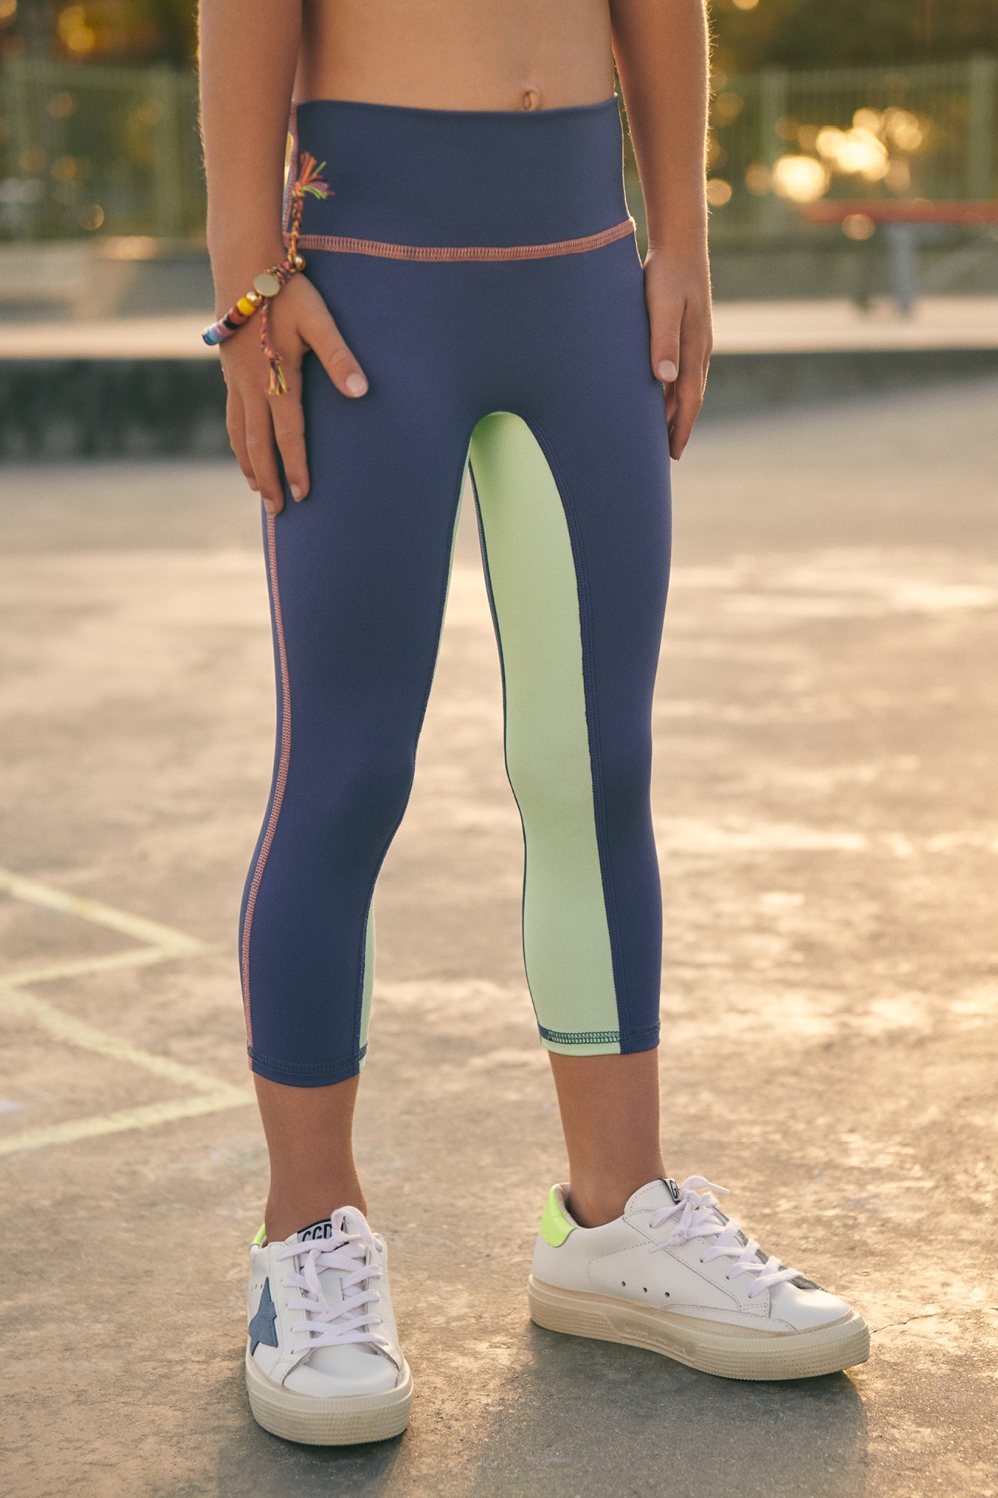 Legging (separate) with tennis ball pocket - Cobalt